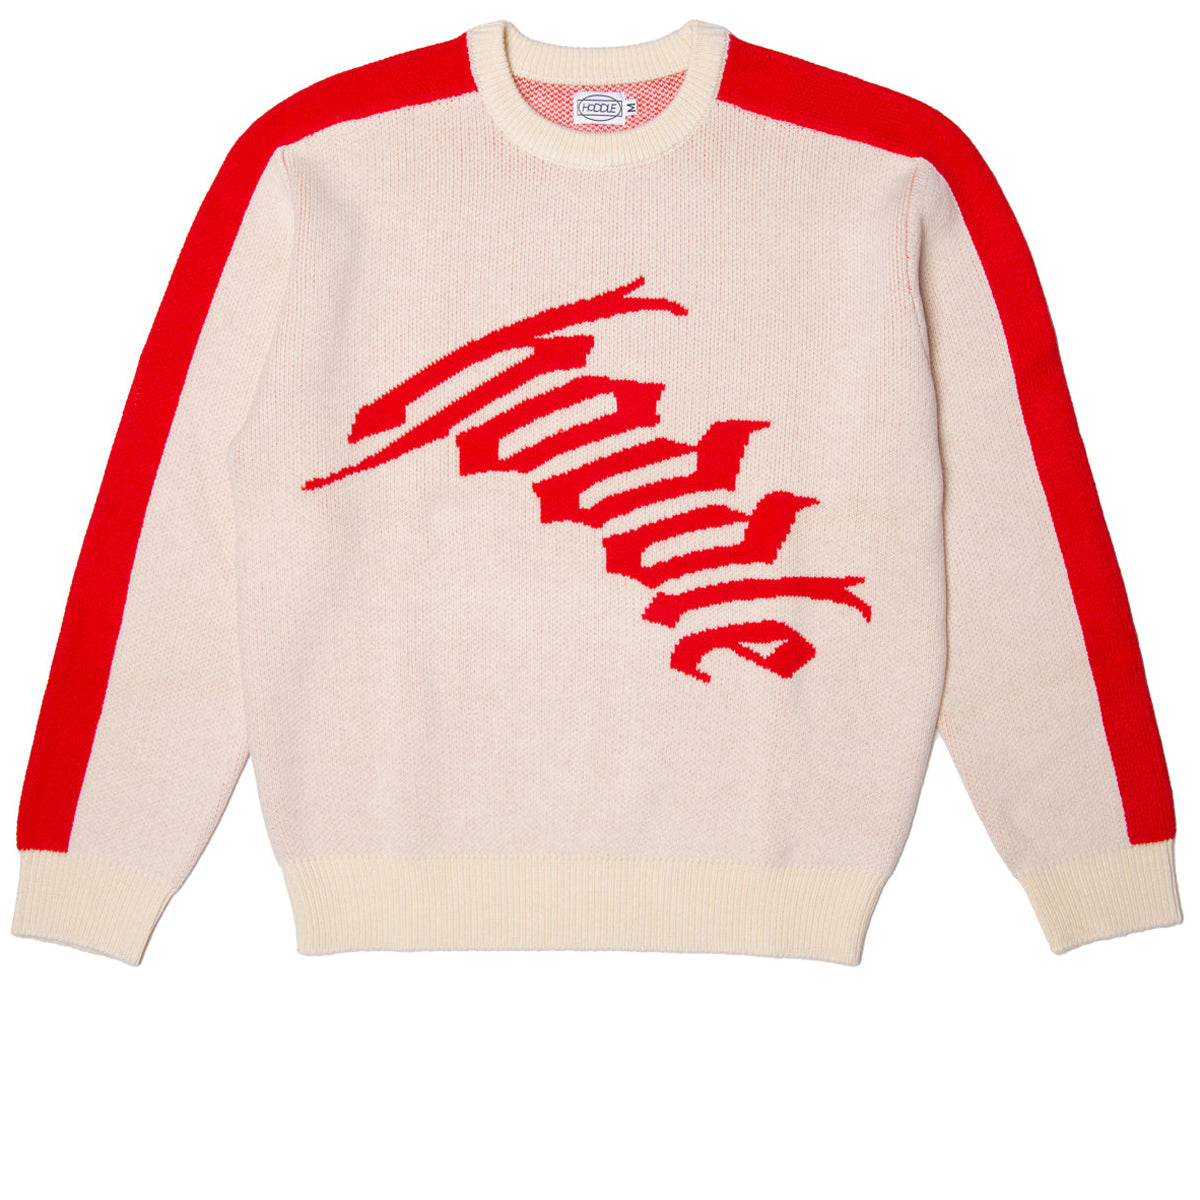 Hoddle Warped Logo Knit Long Sleeve Shirt - Ecru/Red image 1